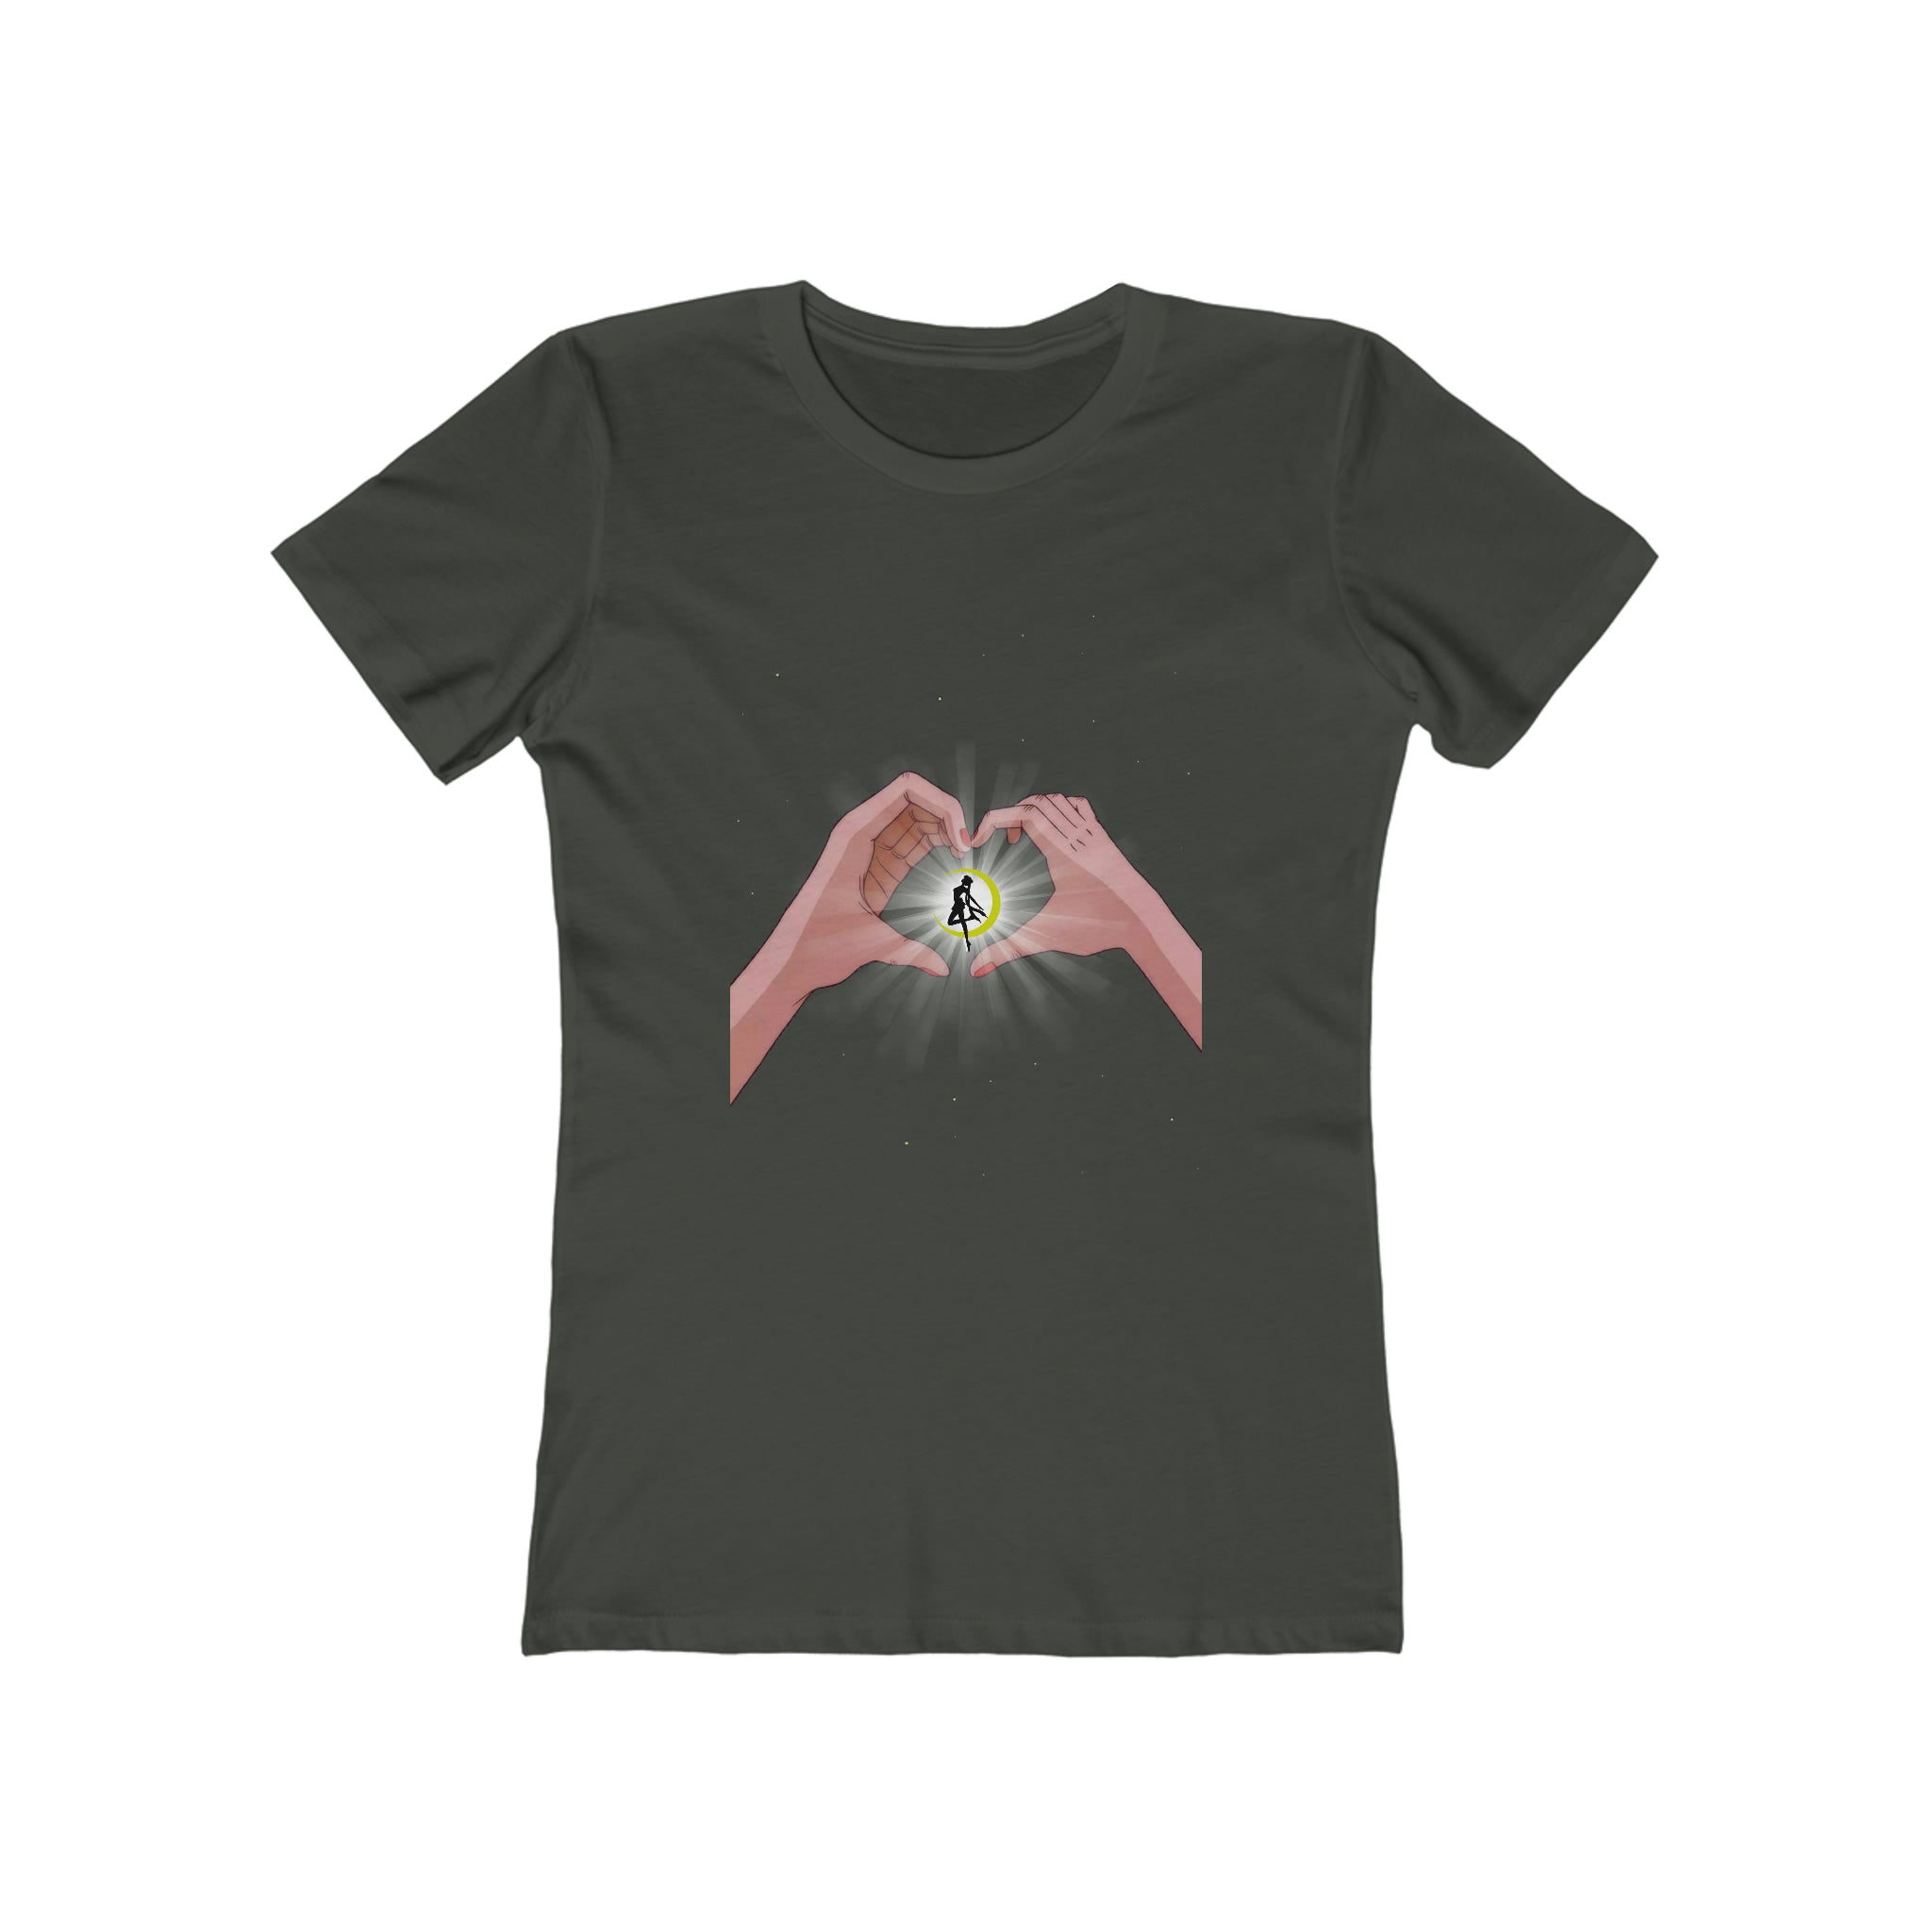 Sailor Girl on the Moon (women) T-Shirt